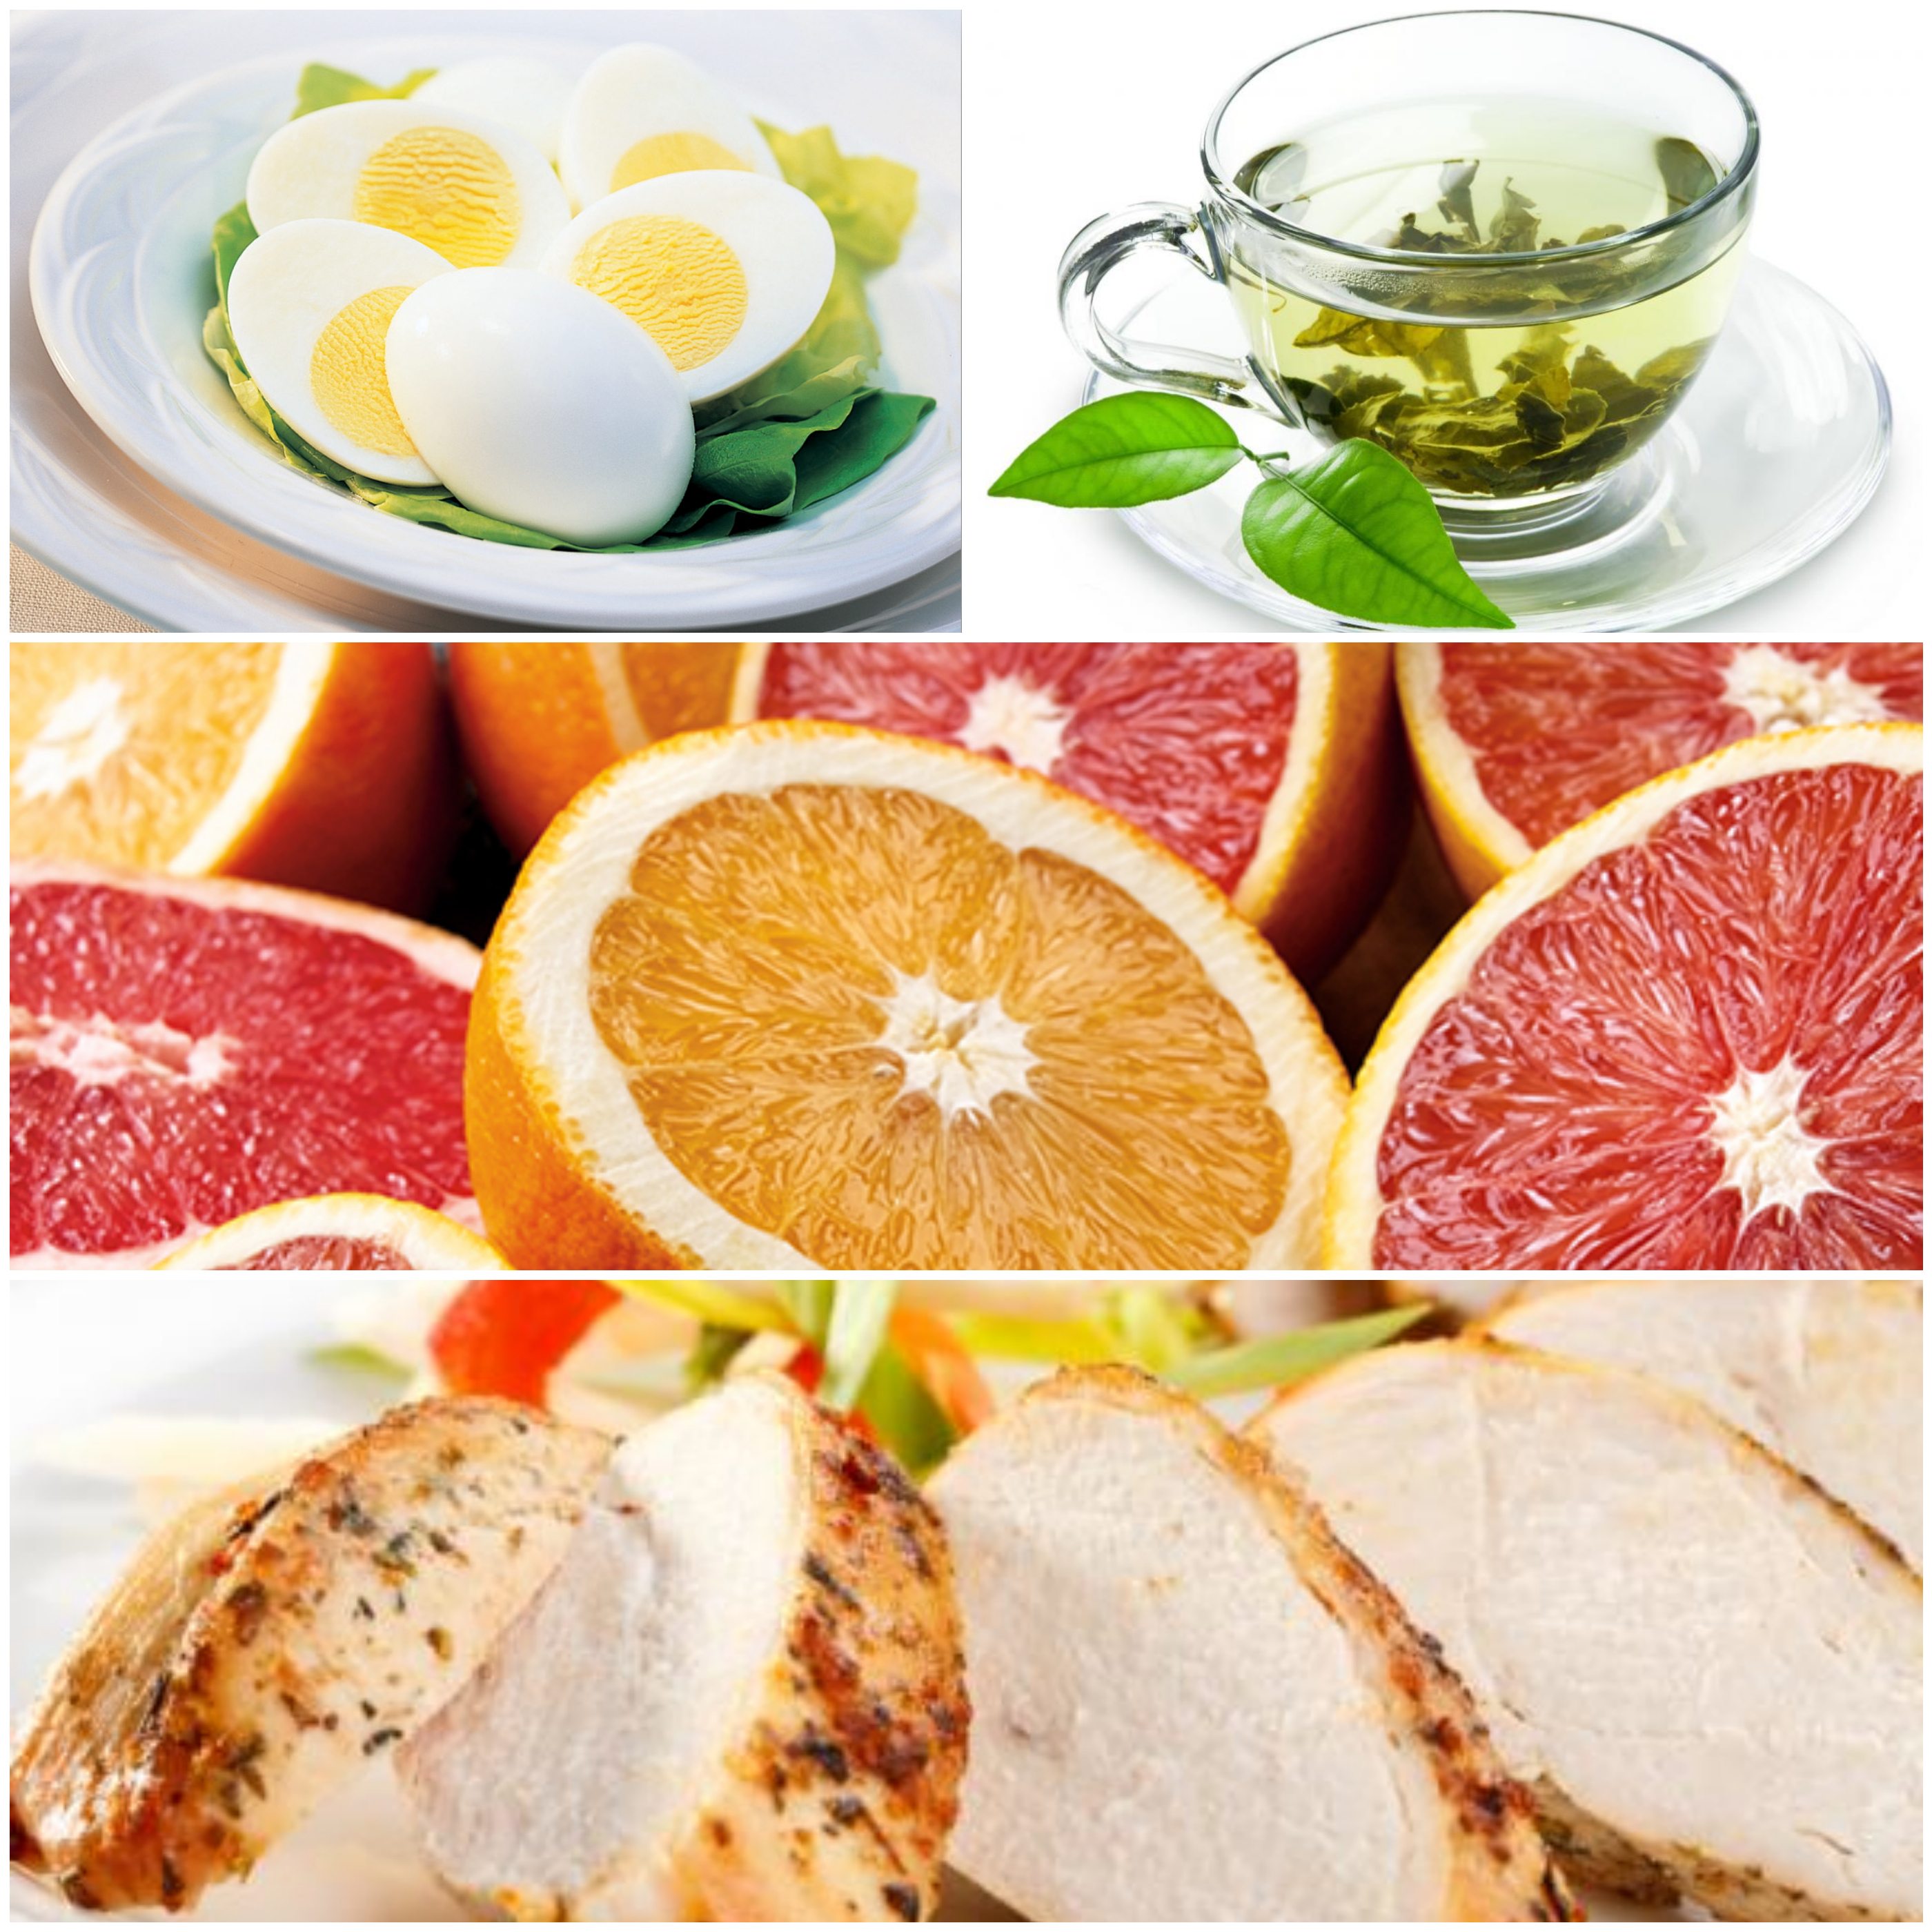 Top 5 energising foods